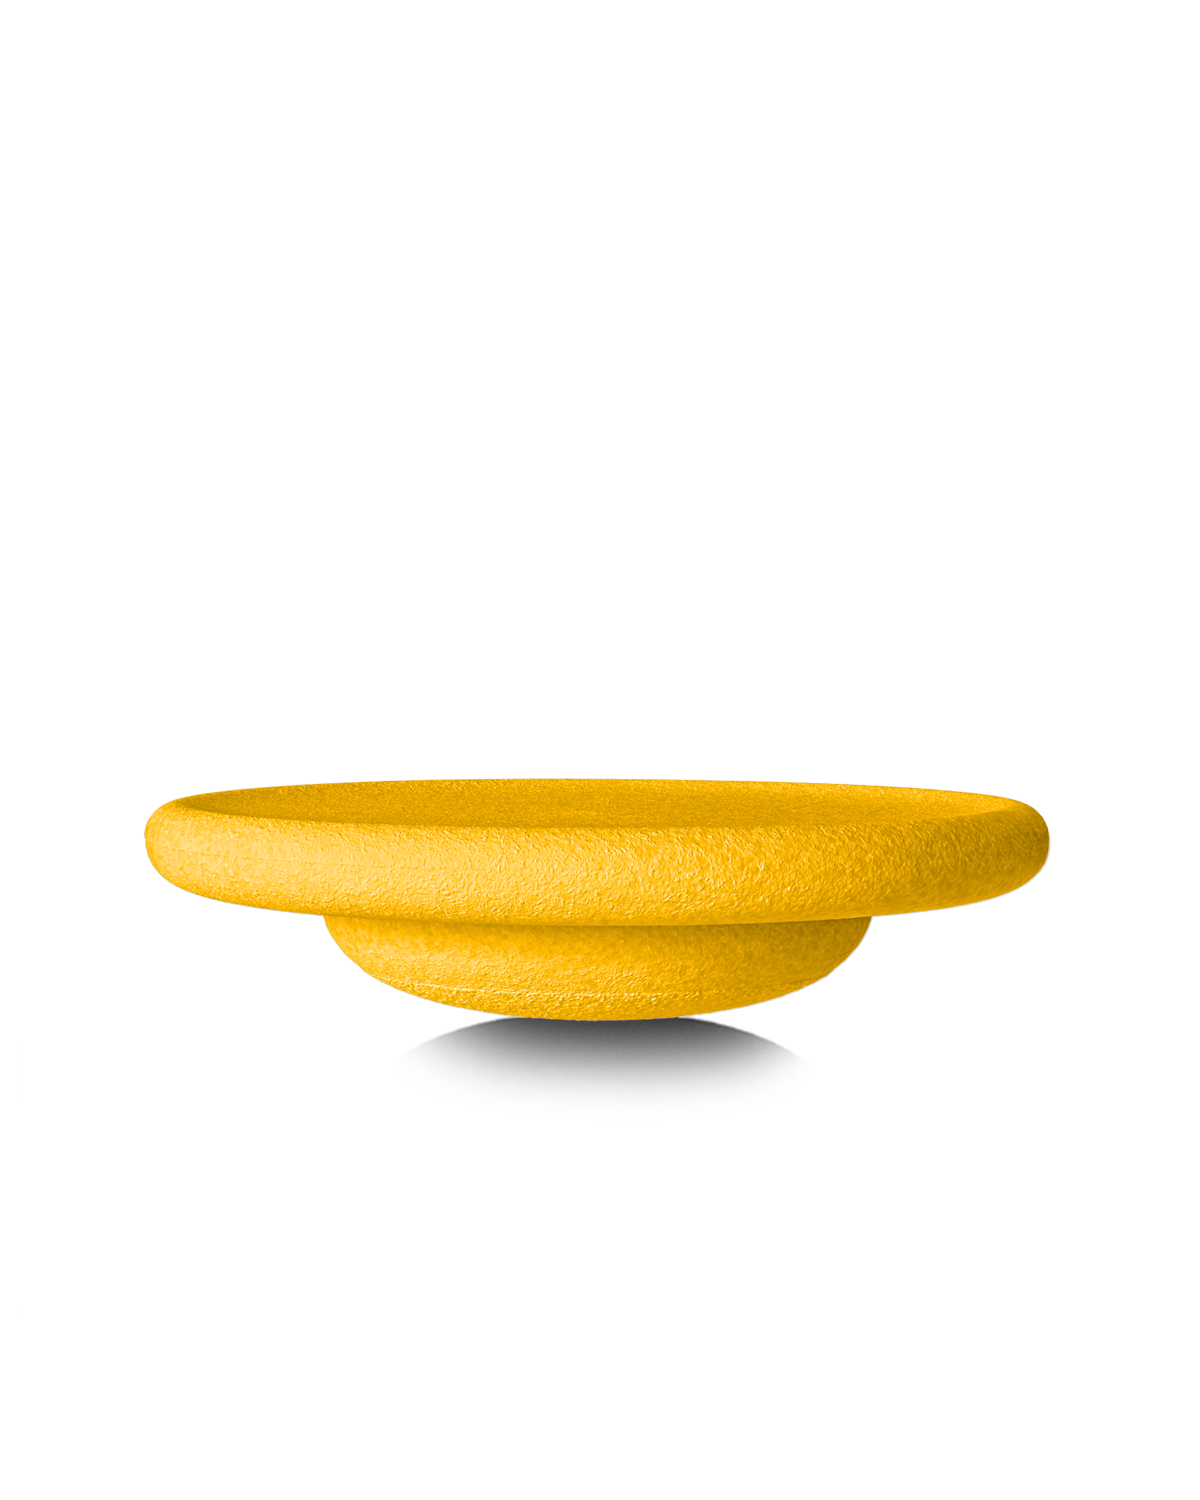 
  
  Stapelstein Balance Board Yellow
  
